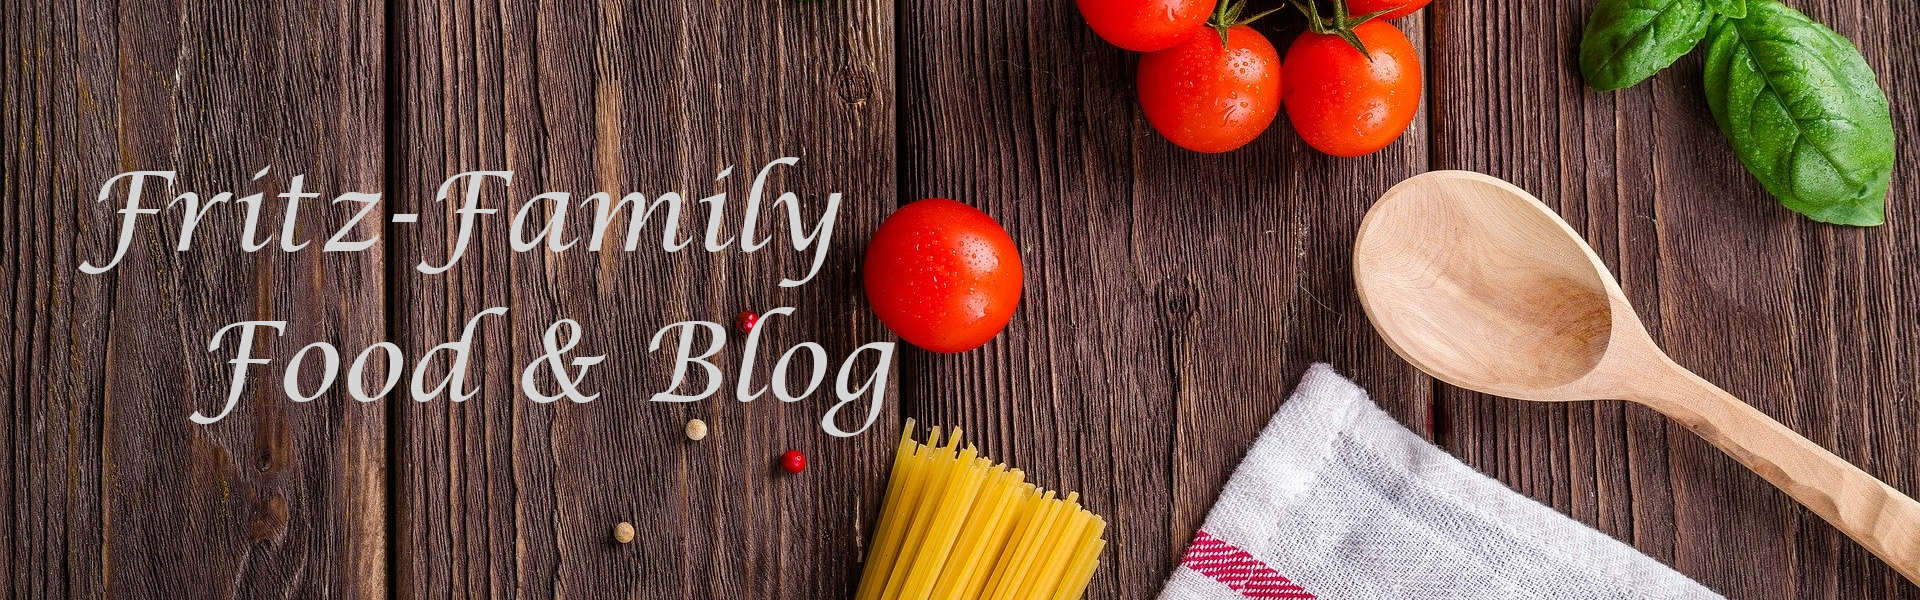 Food & Blog